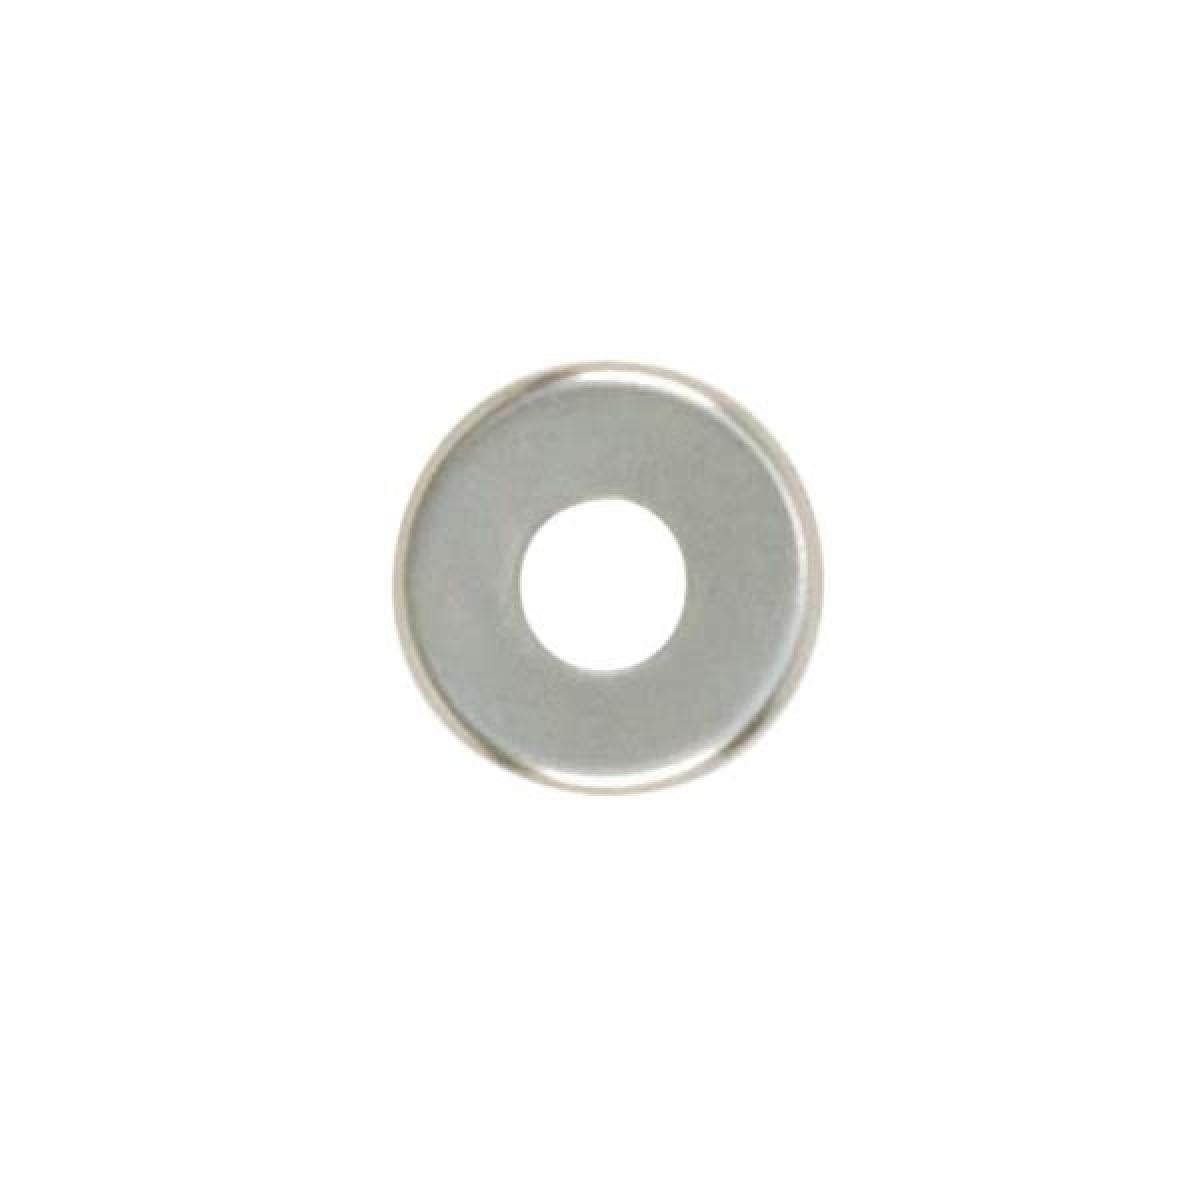 Satco 90-1661 Steel Check Ring Curled Edge 1/8 IP Slip Nickel Plated Finish 1/2" Diameter